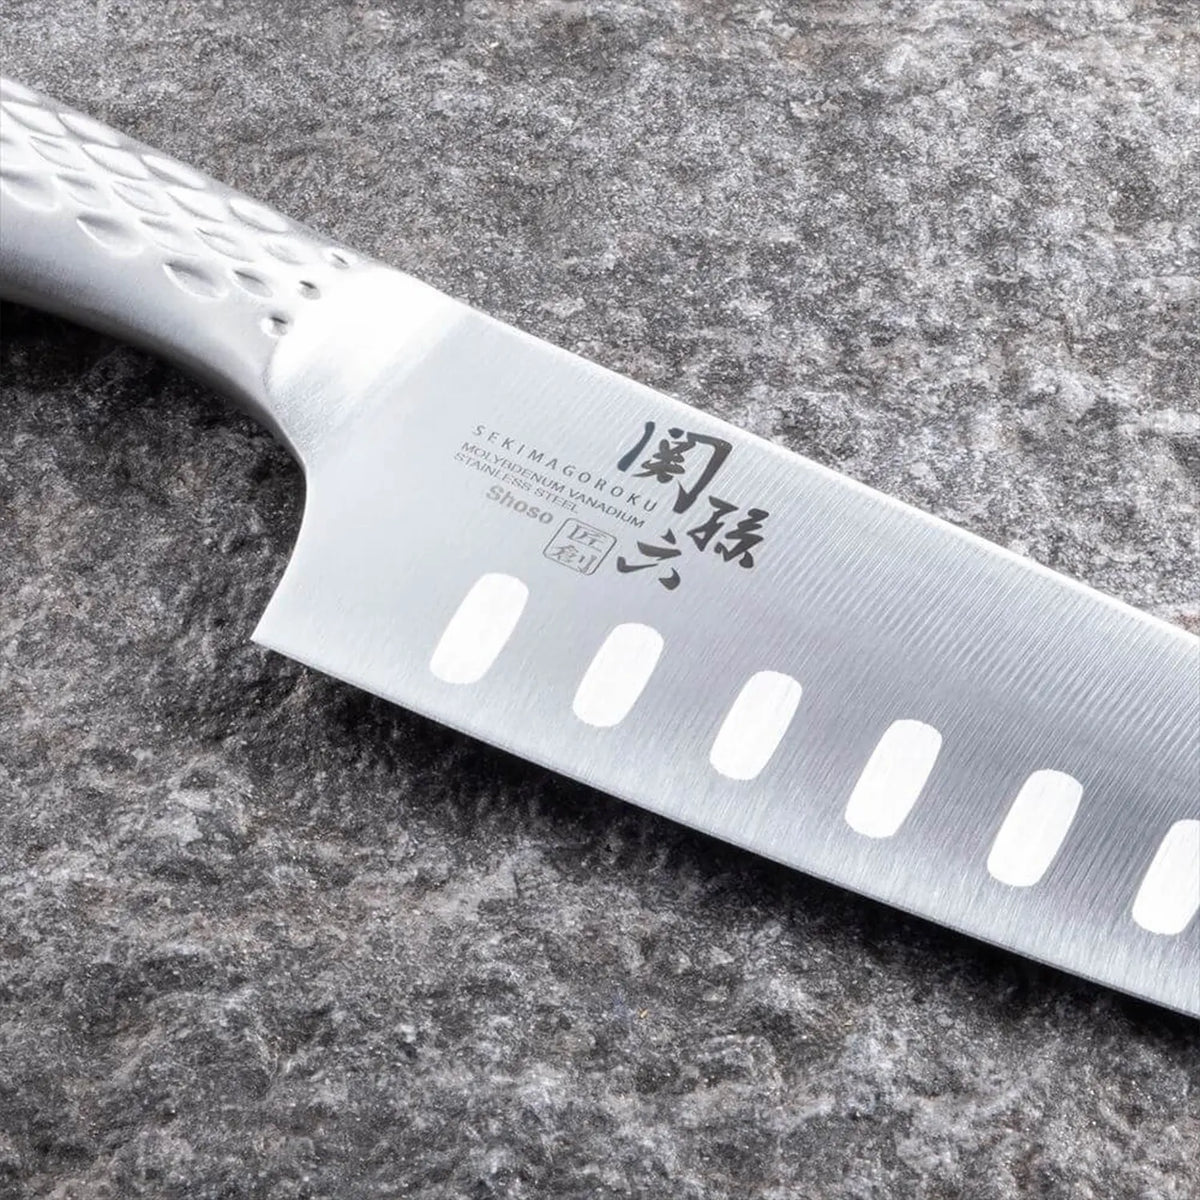 Set de 3 couteaux Kai Seki magoroku Serie IMAYO chef santoku Japon